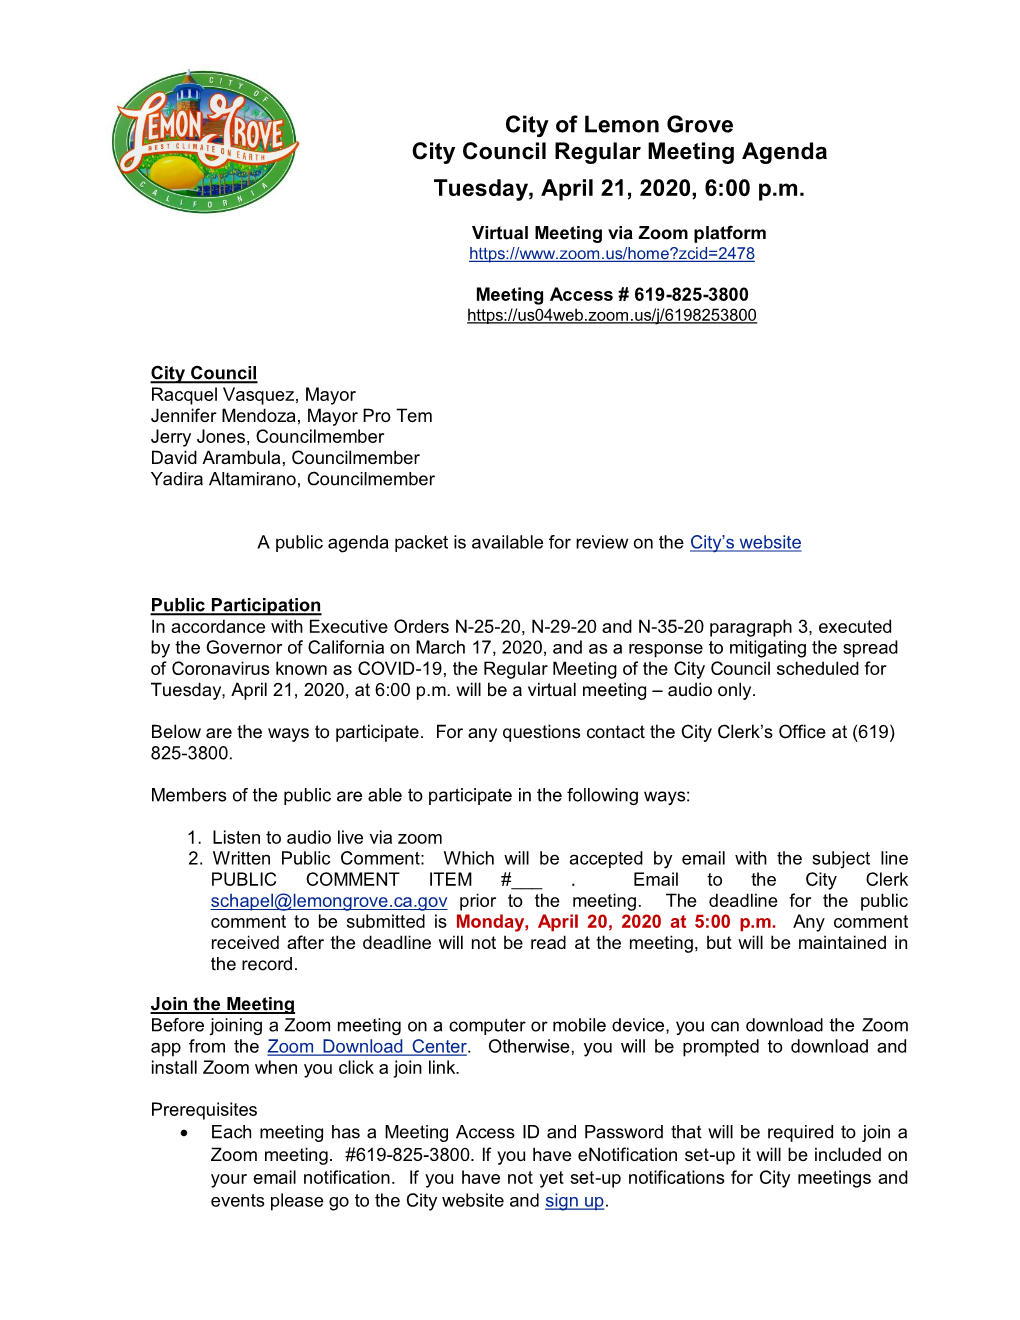 City of Lemon Grove City Council Regular Meeting Agenda Tuesday, April 21, 2020, 6:00 P.M